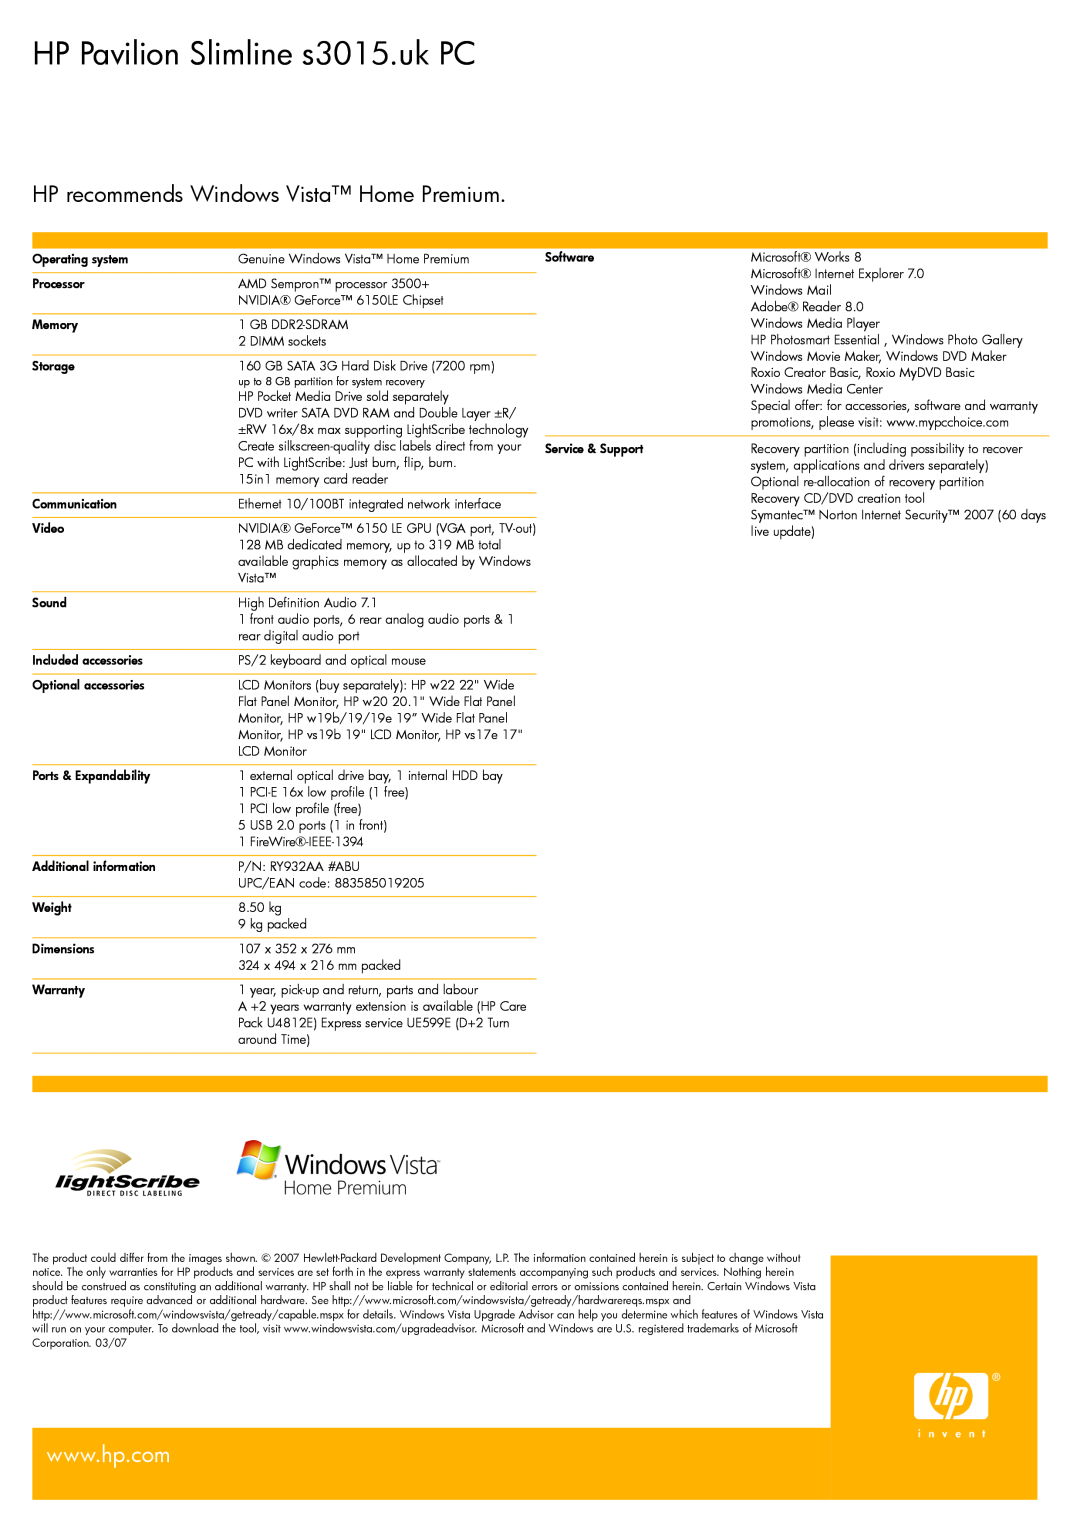 BT manual HP Pavilion Slimline s3015.uk PC, HP recommends Windows Vista Home Premium, Operating system 